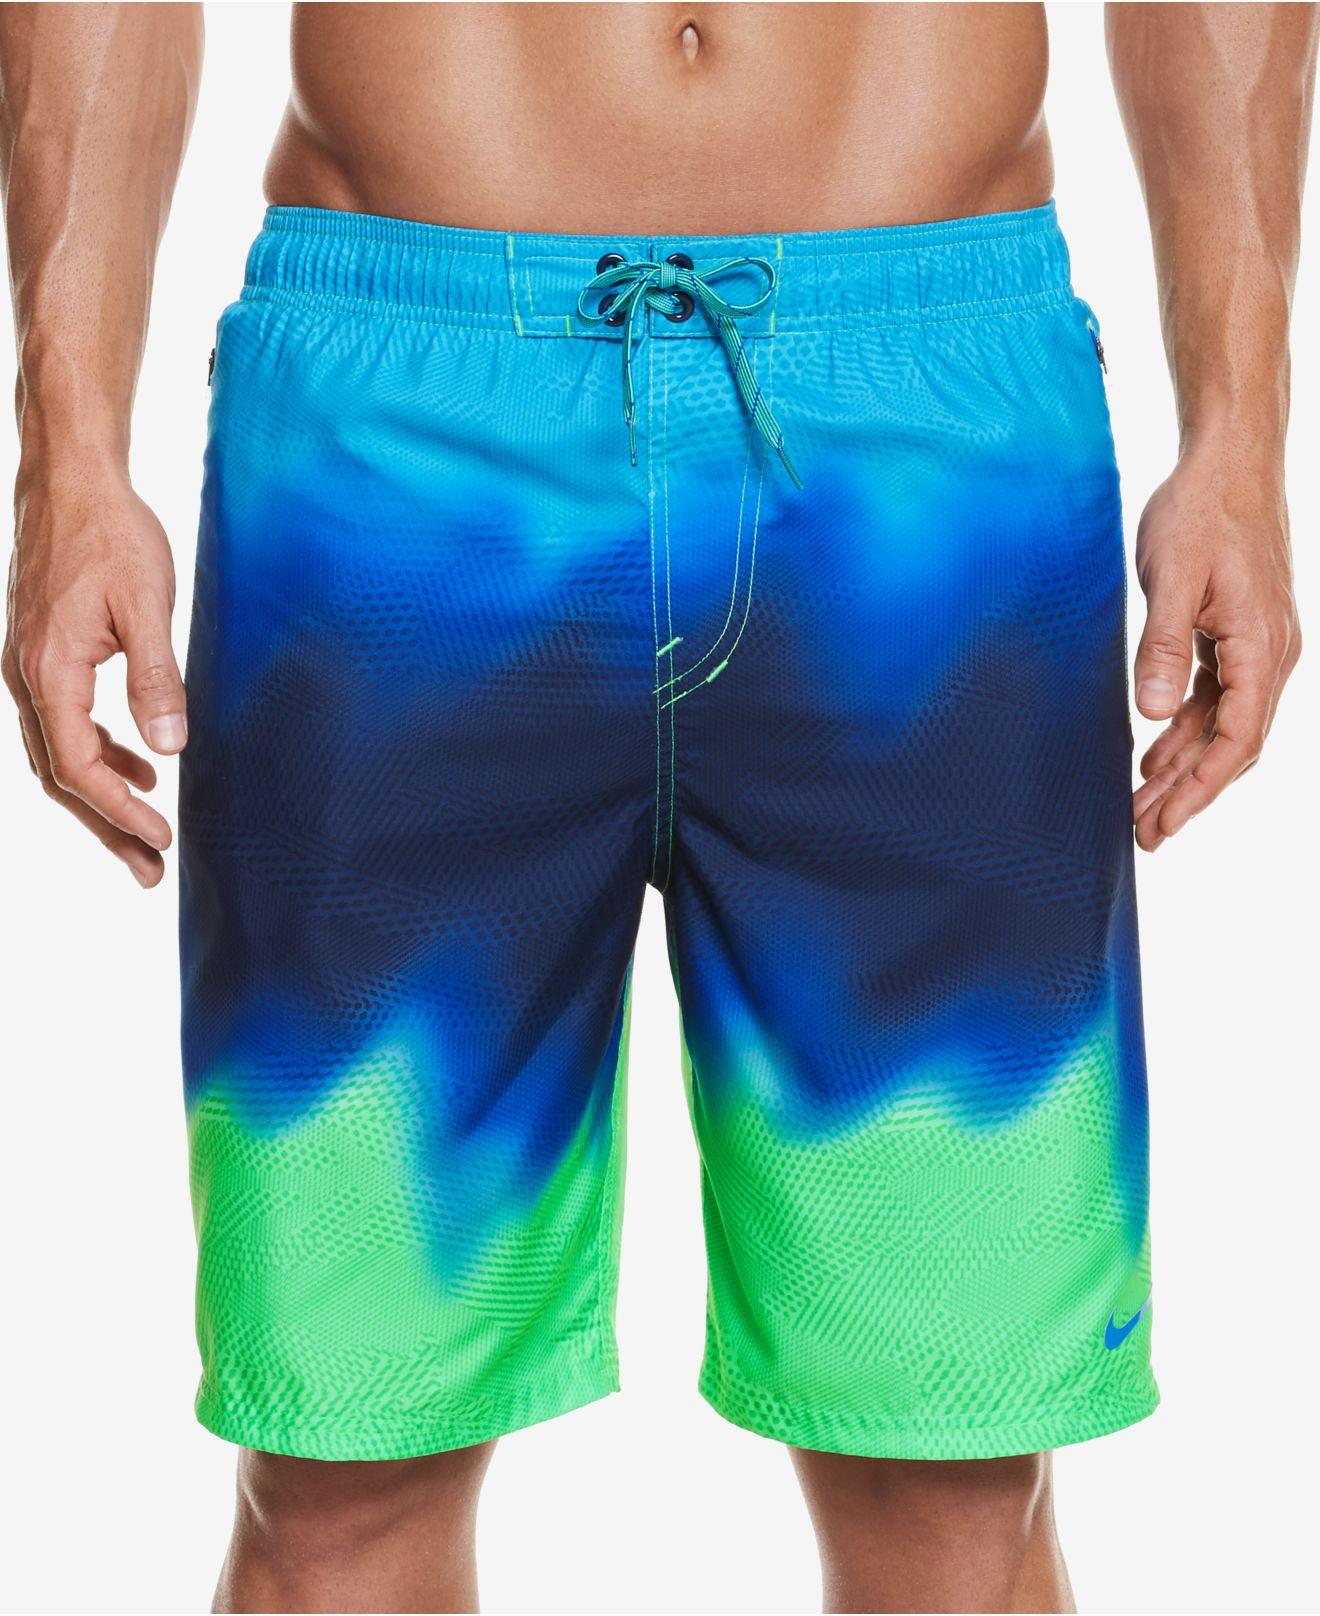 Lyst Nike Men s  Liquid Haze Water shedding Swim Suit  in 